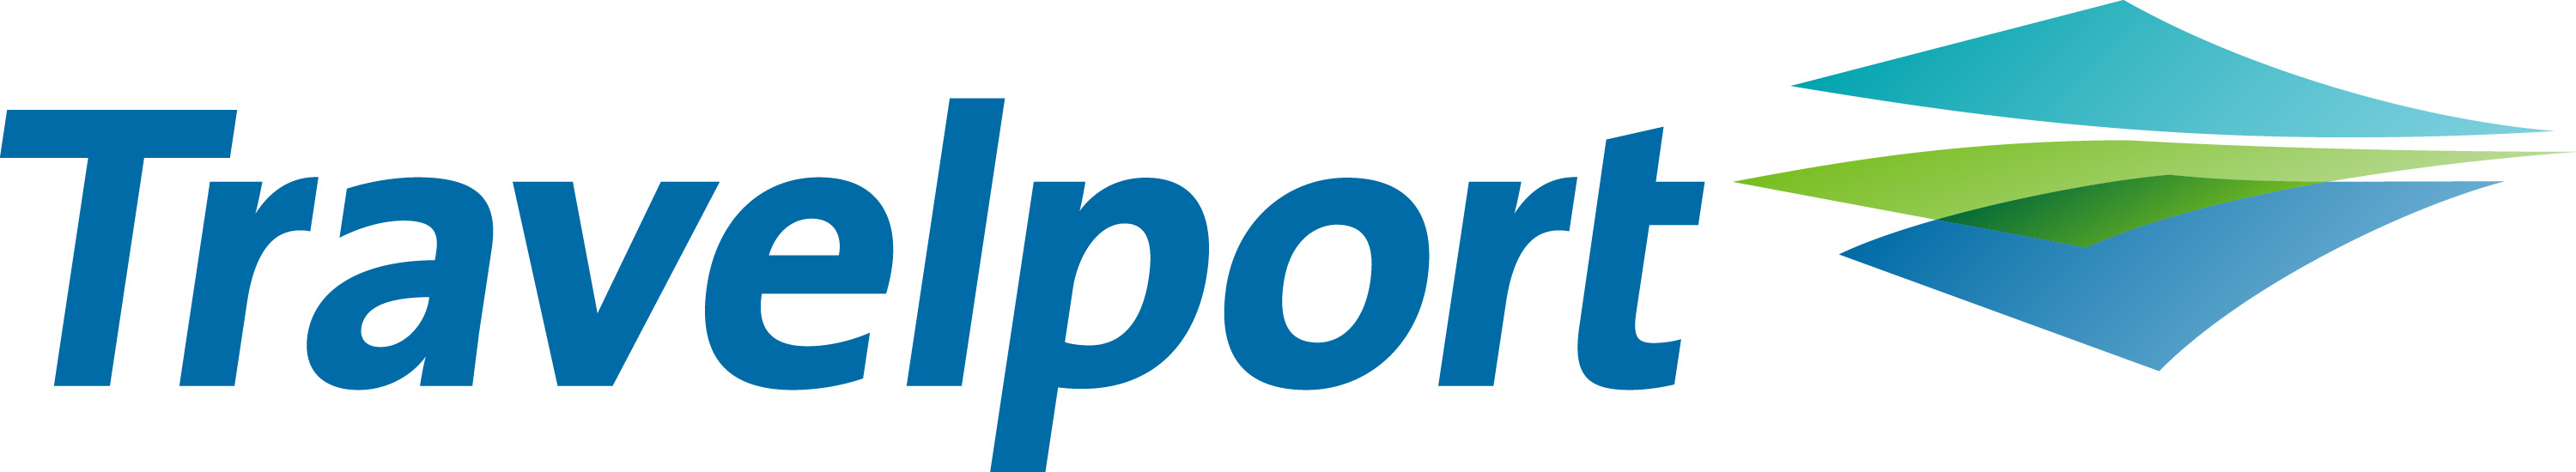 Travelport Primary Logo RGB[1]